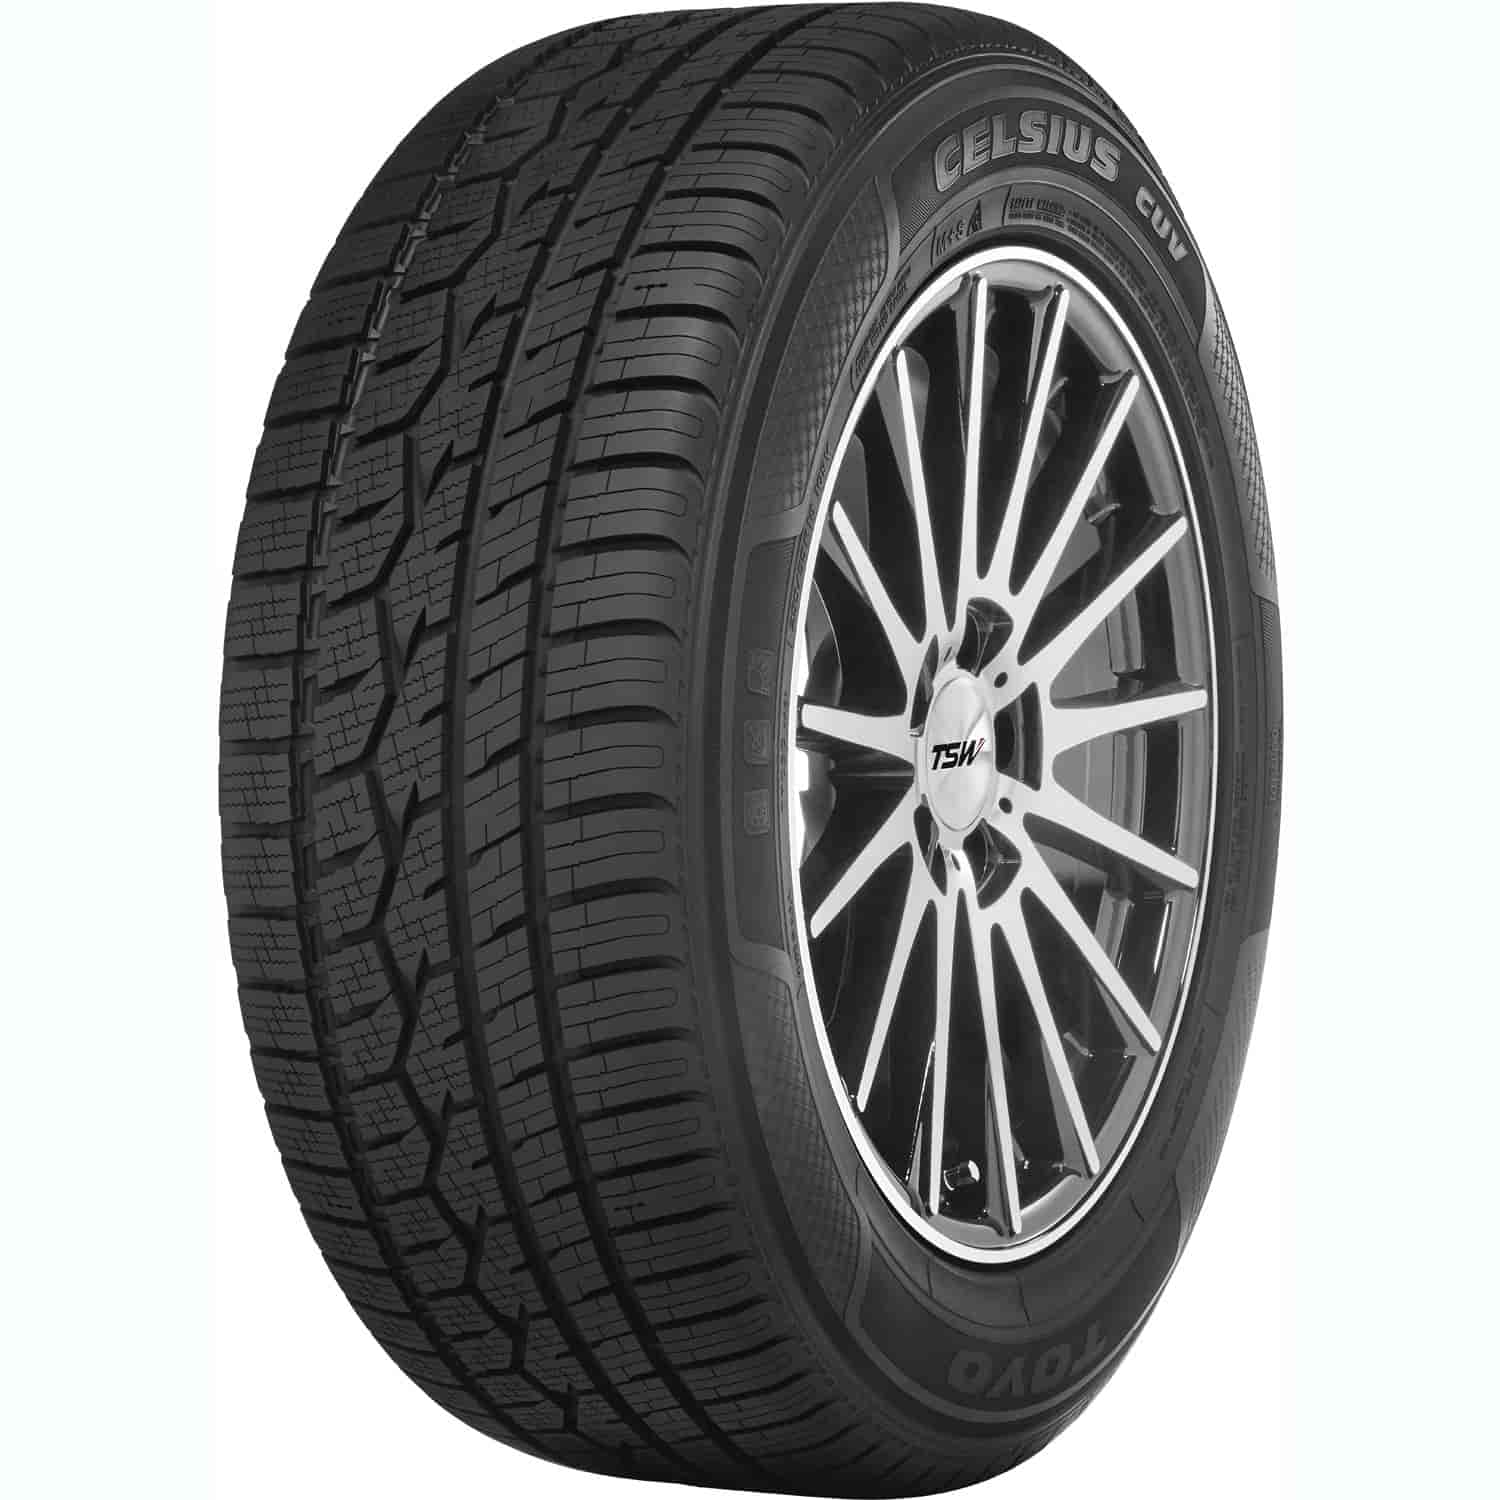 Celsius CUV Tire 225/55R19